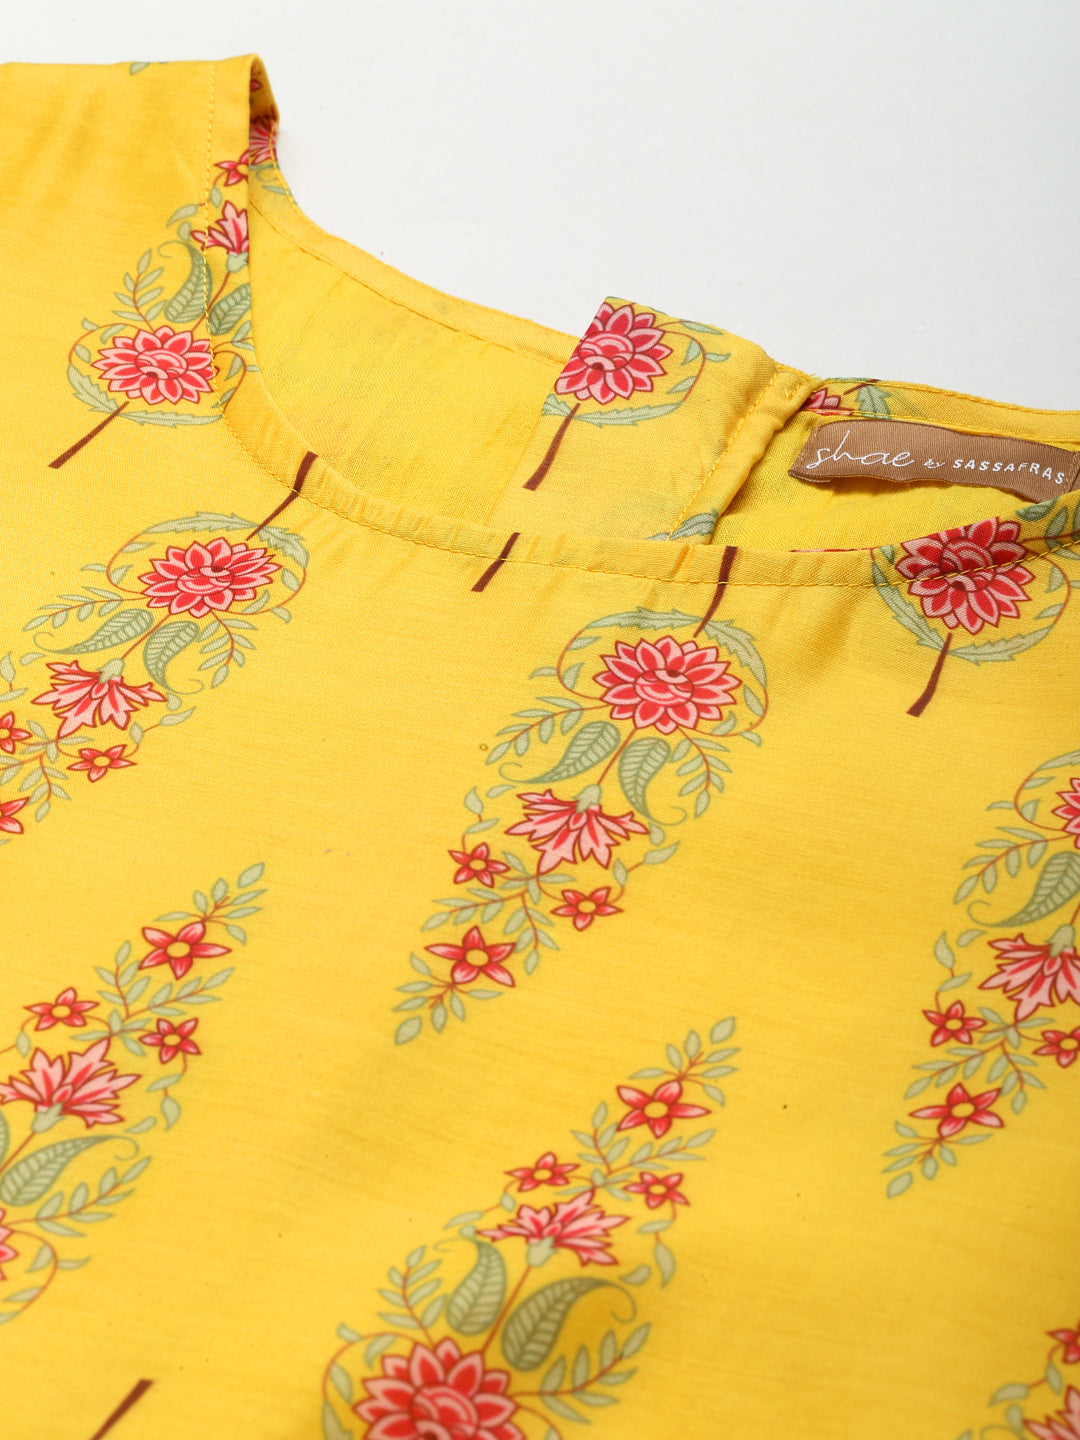 Women Yellow Floral Aanrkali Dress